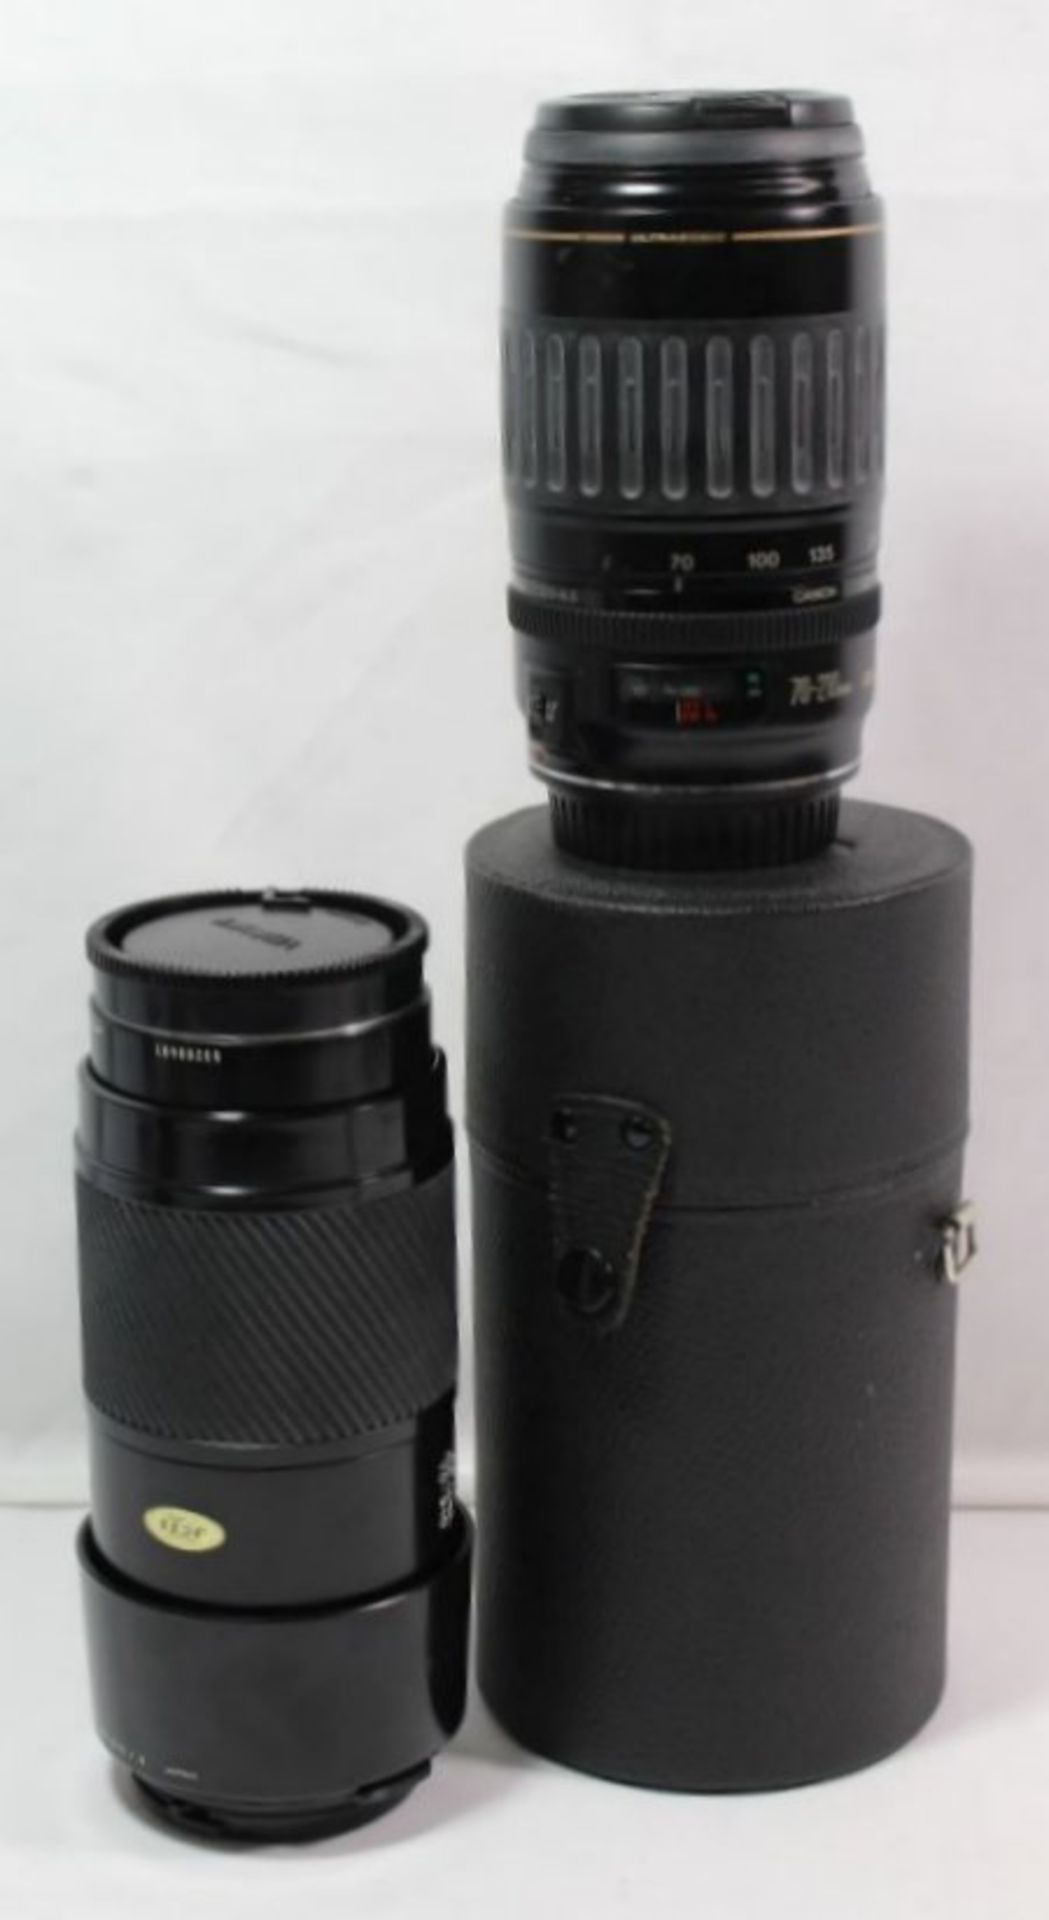 2x Objektive, Minolta AF Lens 70-210 und Canon Ultrasonic 70-210.